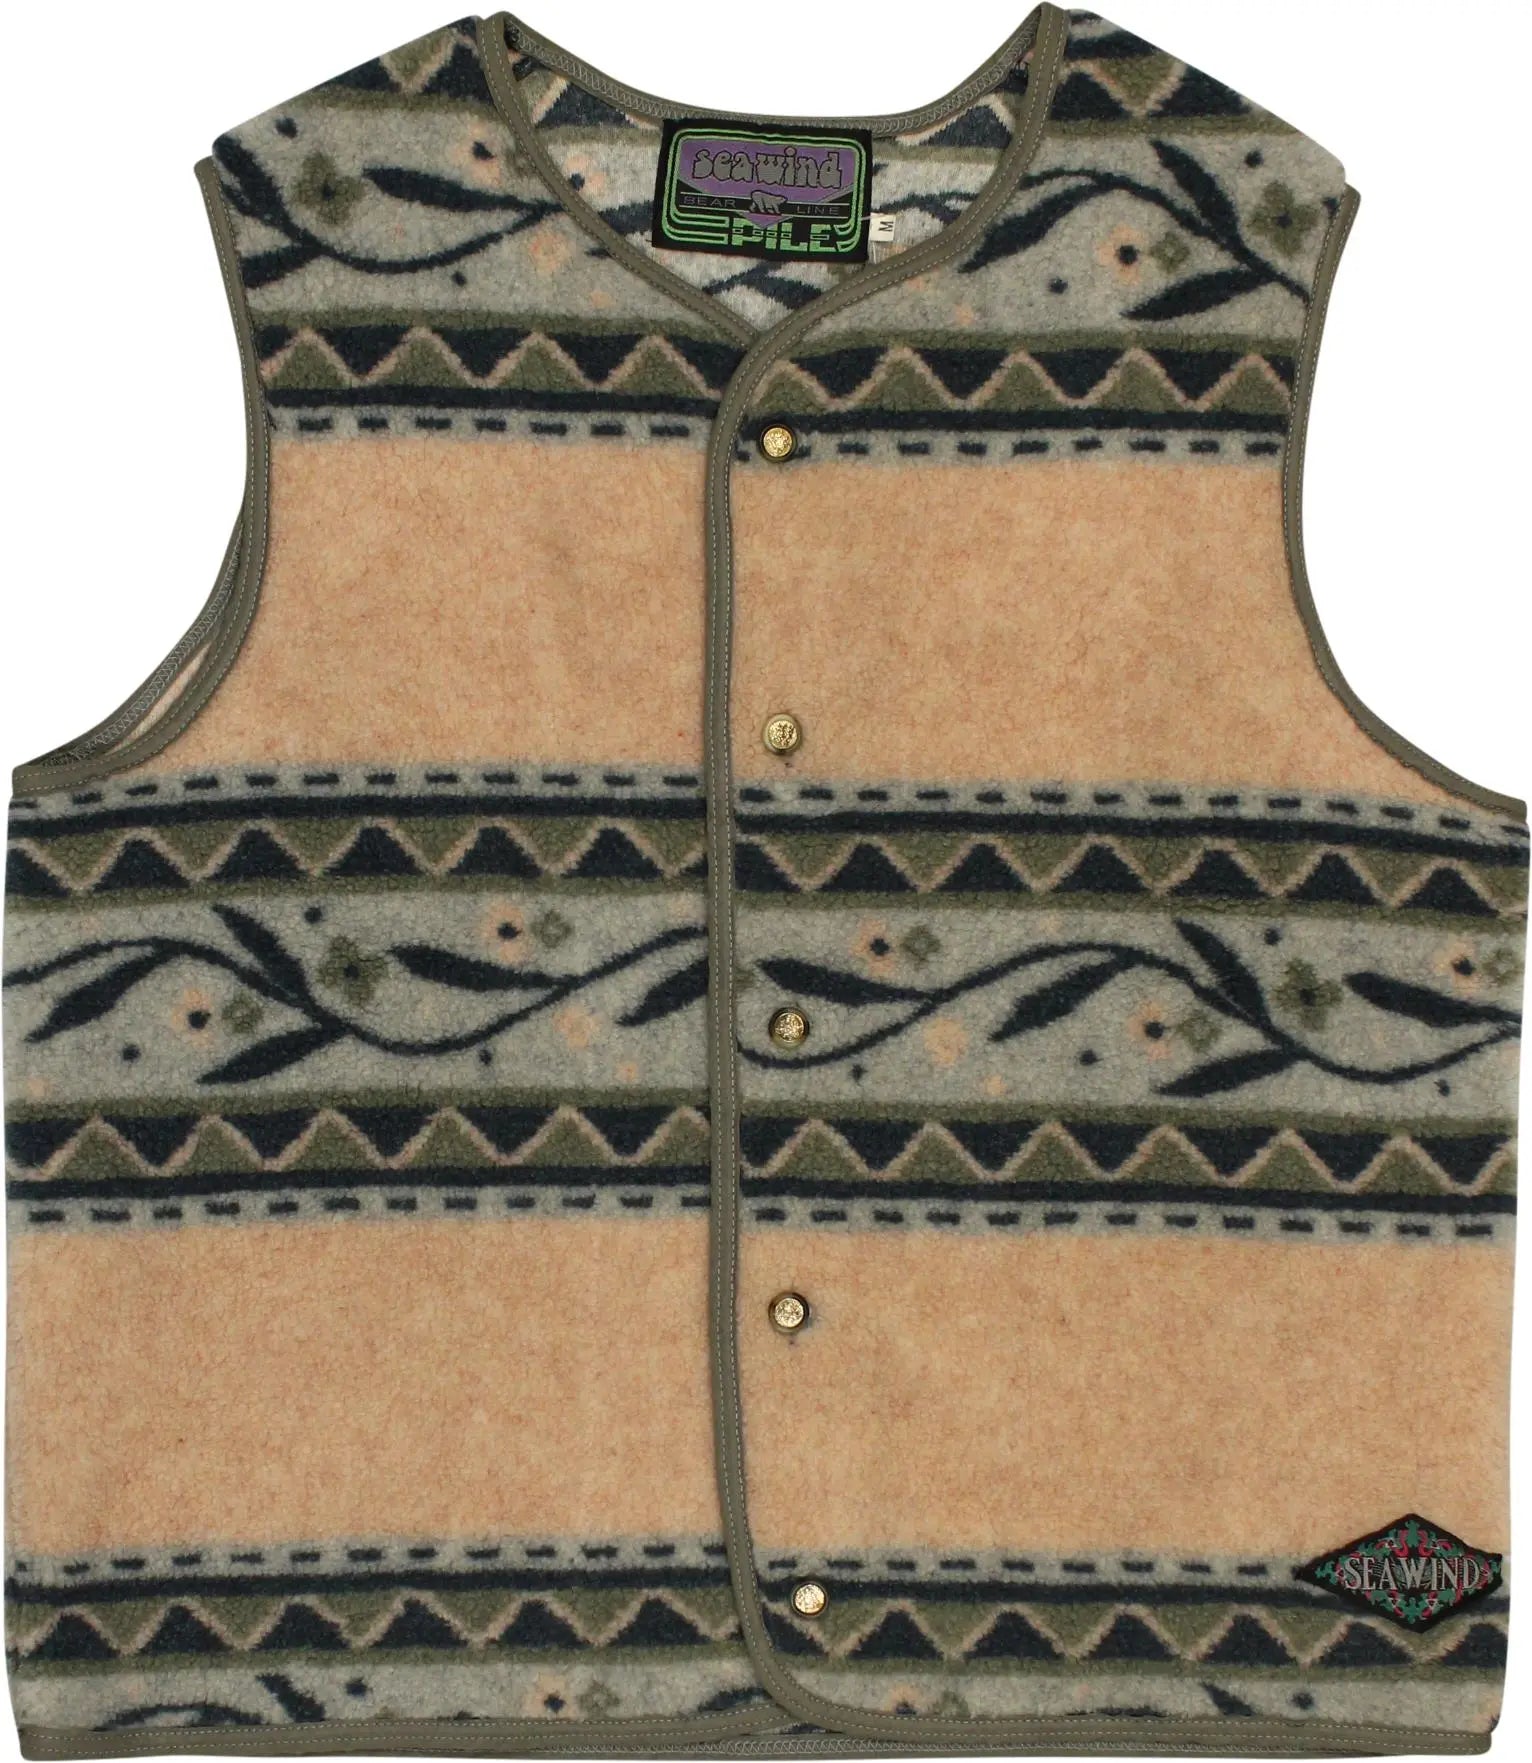 Seawind - 90s Fleece Vest- ThriftTale.com - Vintage and second handclothing